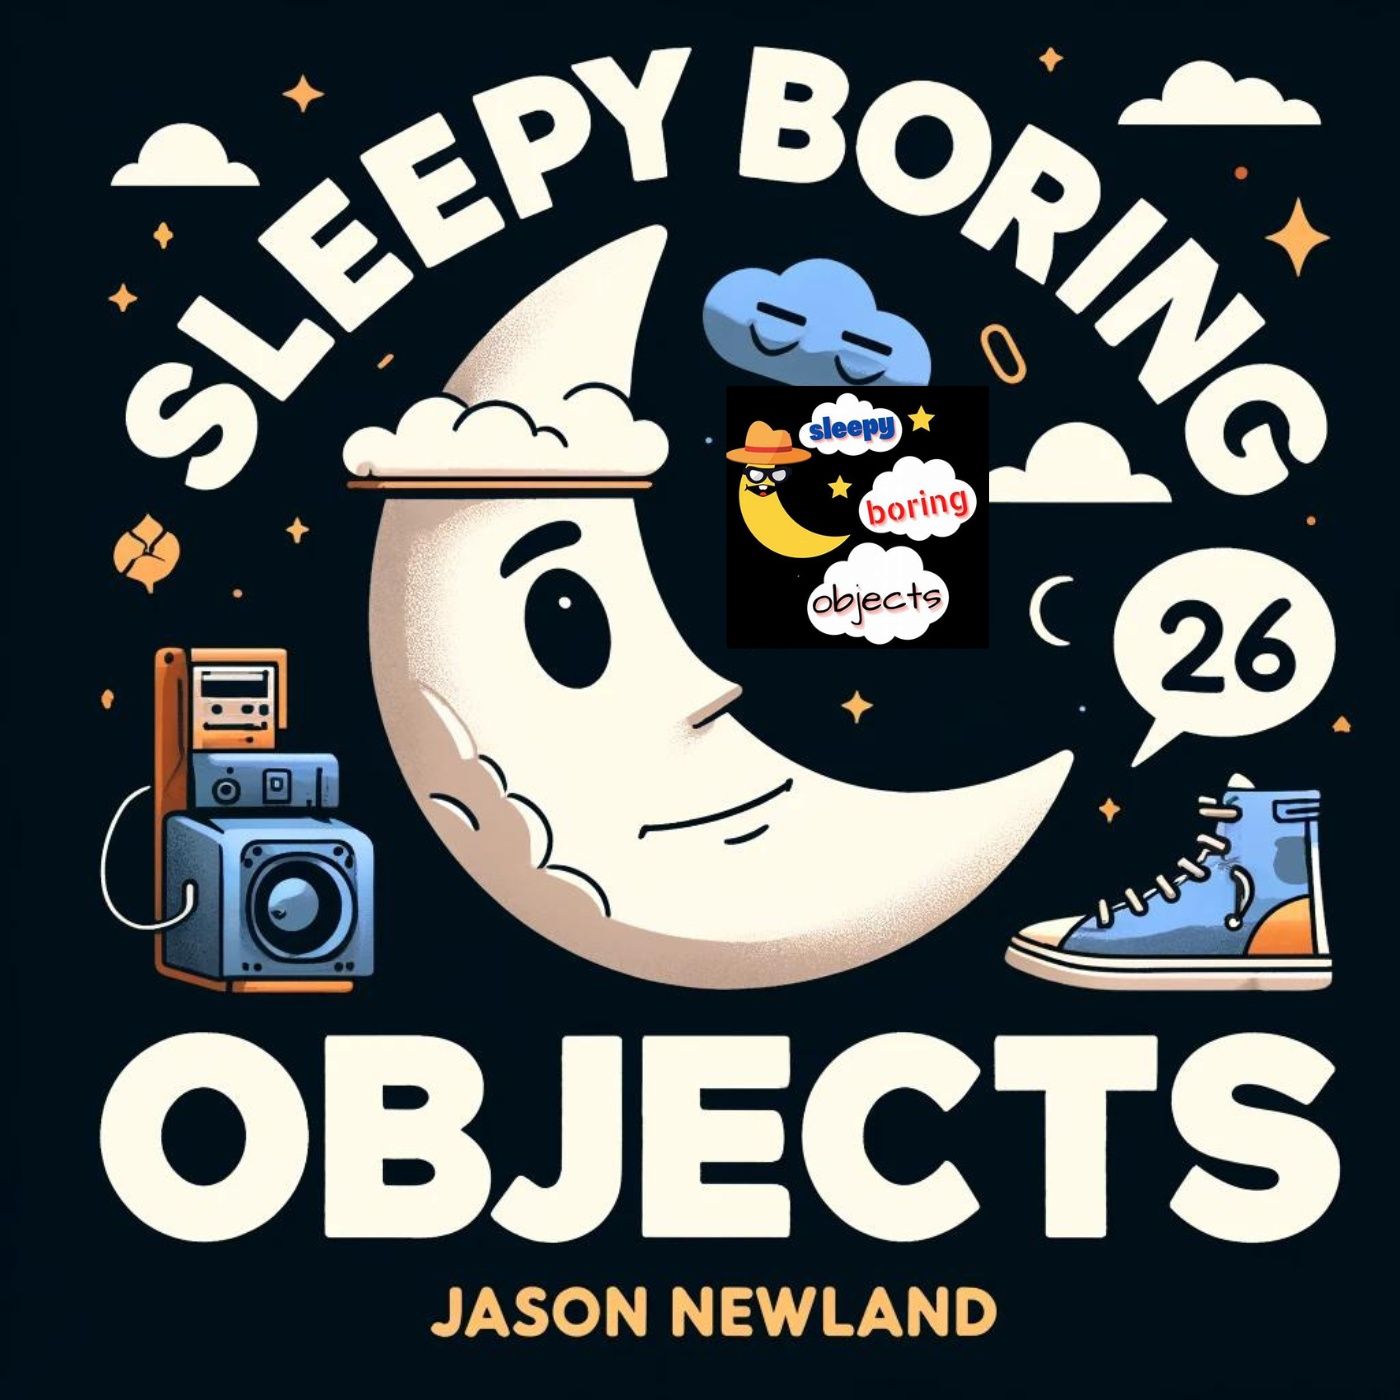 #26 “Shoes” SLEEPY Boring Objects (Jason Newland) (9th May 2022)